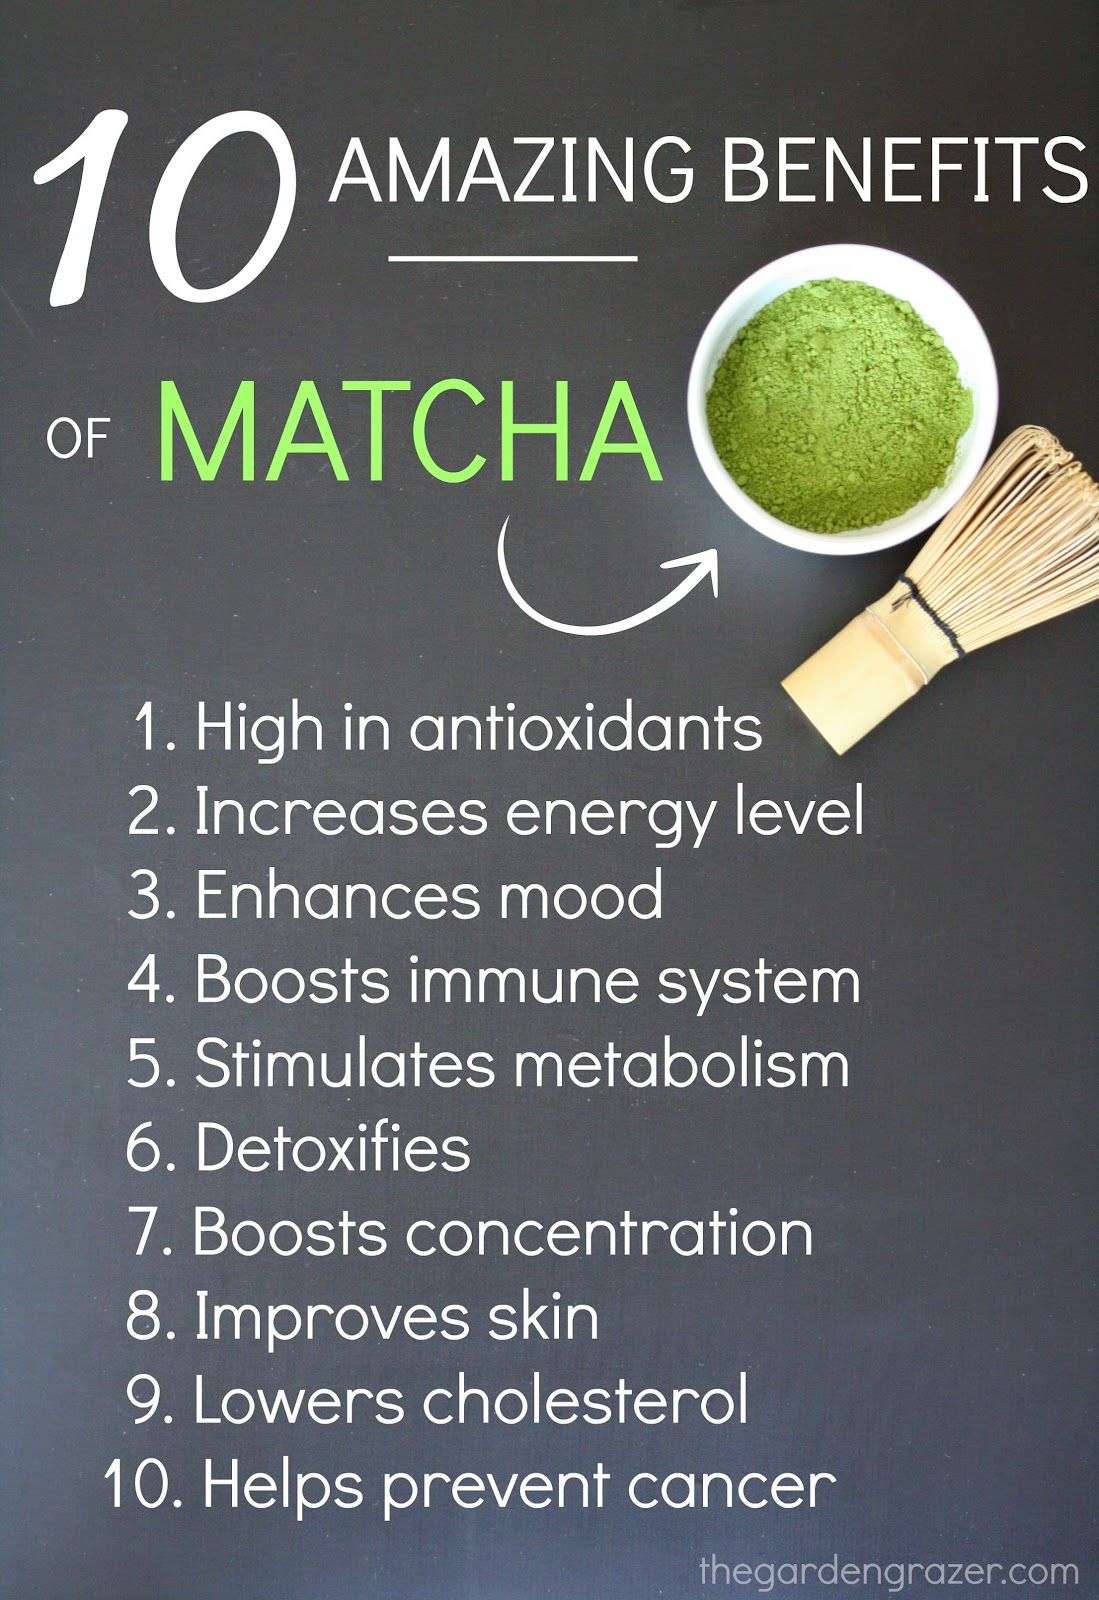 Part 3: The Benefits of Matcha